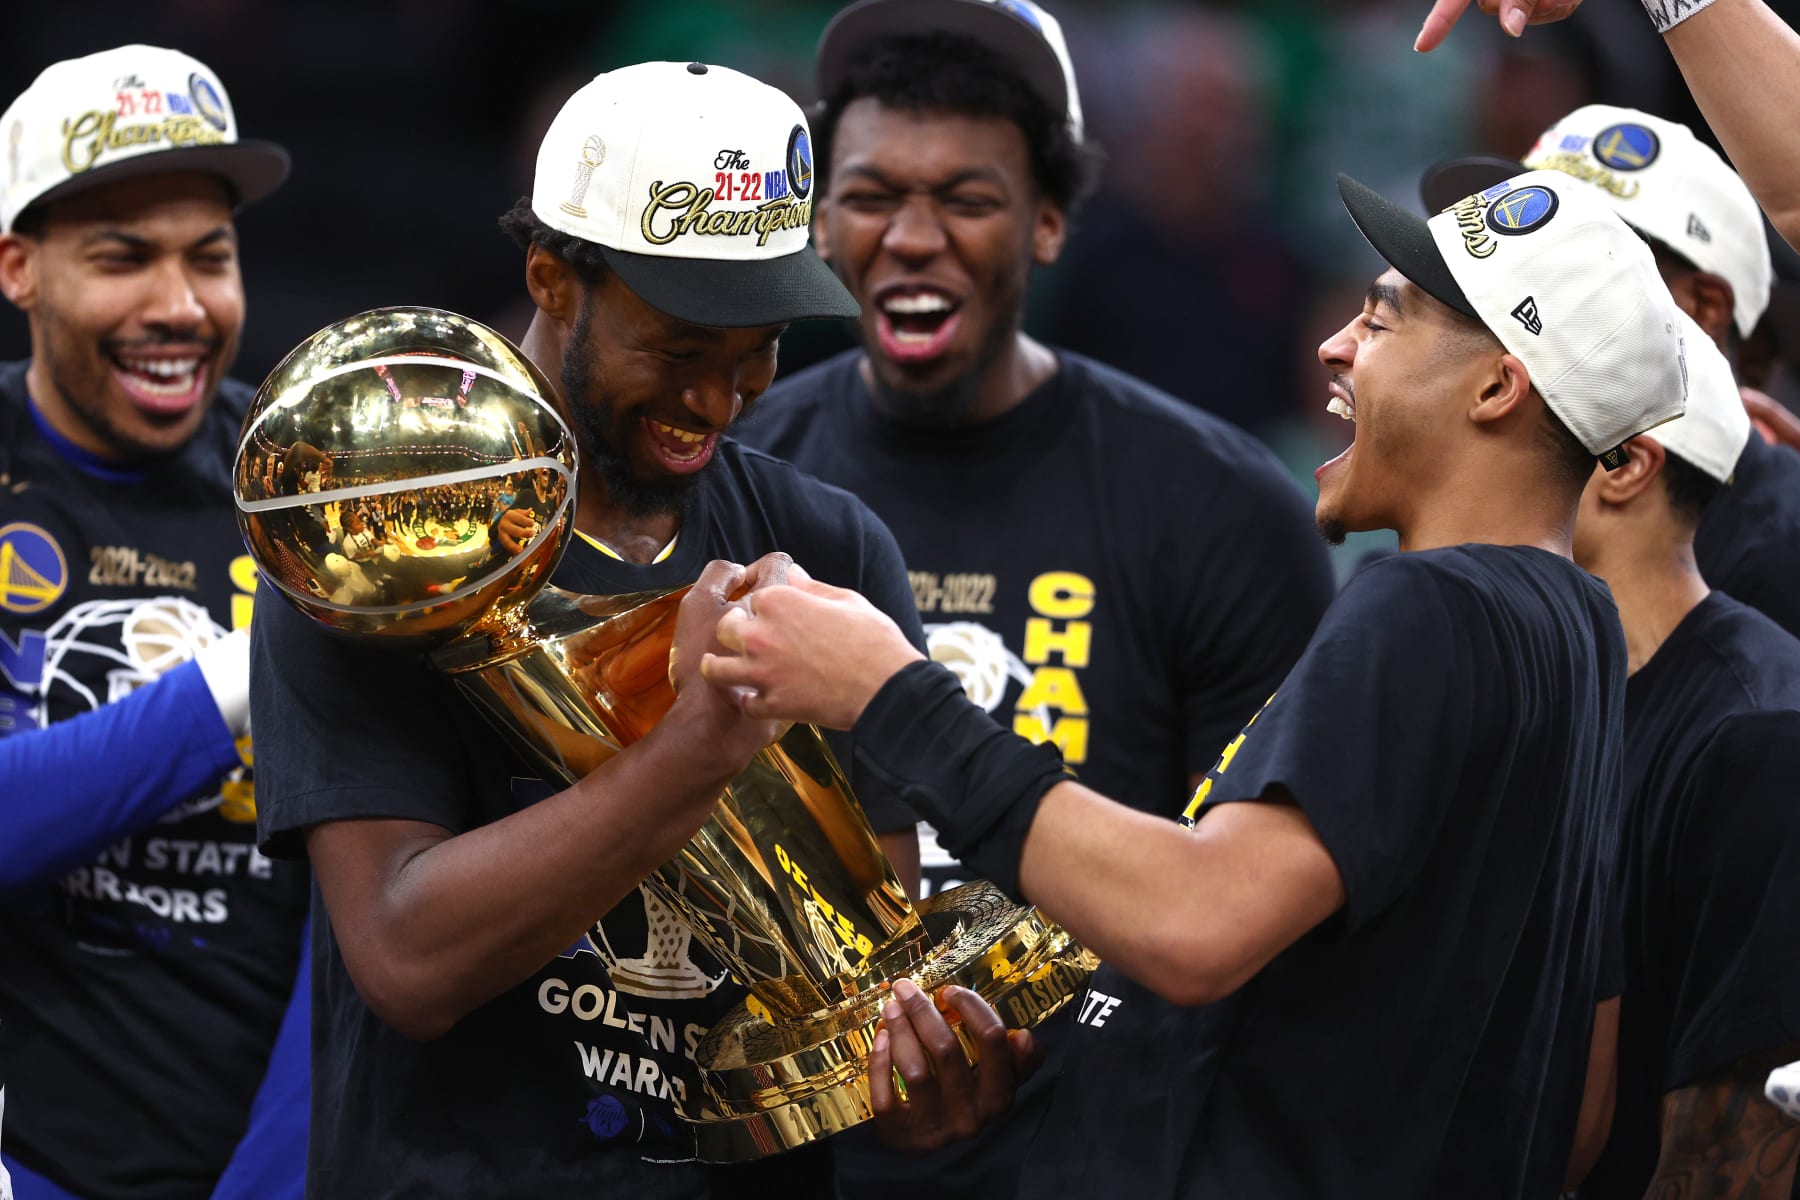 Stuff of legends': Warriors' Klay Thompson caps long comeback with NBA  championship